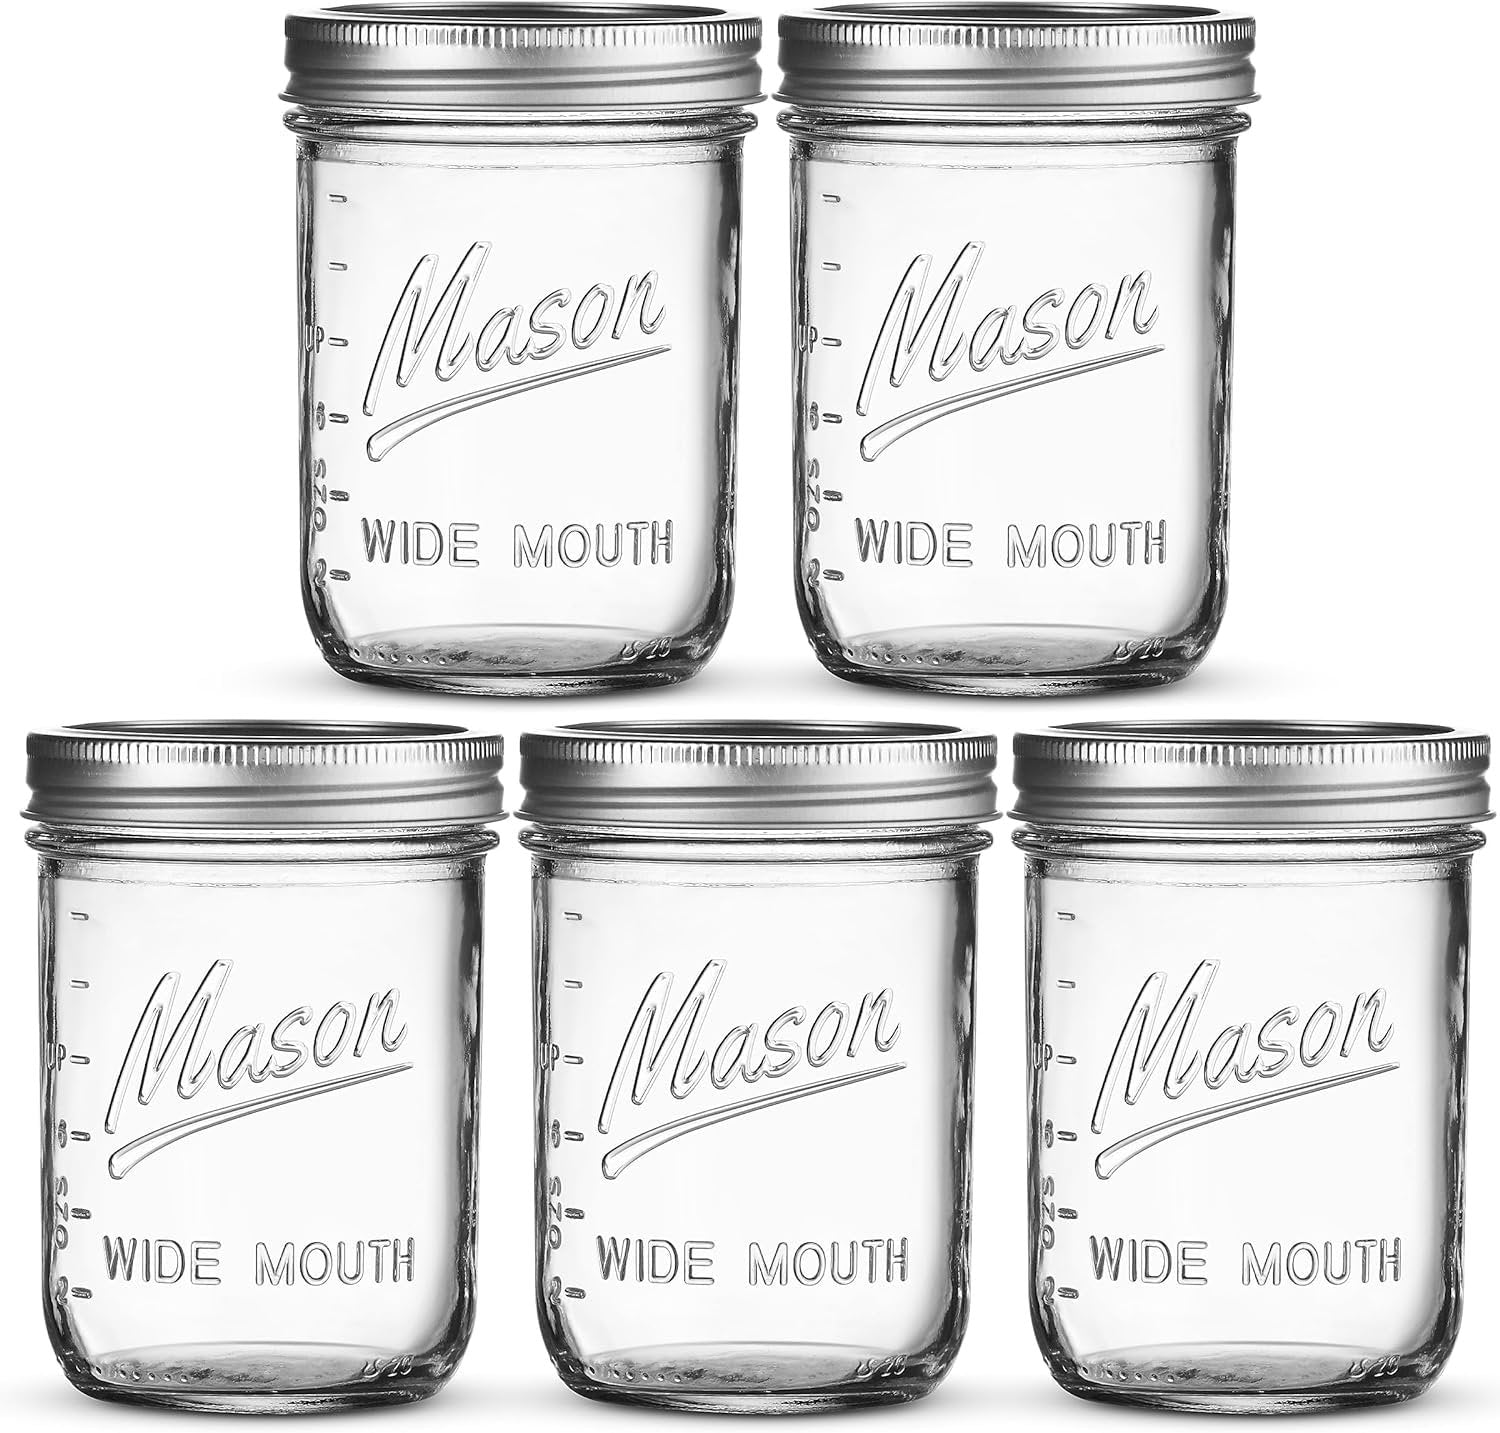 SEWANTA Wide Mouth Mason Jars 16 oz With mason jar lids and Bands, mason jars 16 oz - For Canning, Fermenting, Pickling - Jar Décor - Microwave/Freeze/Dishwasher Safe. (12)